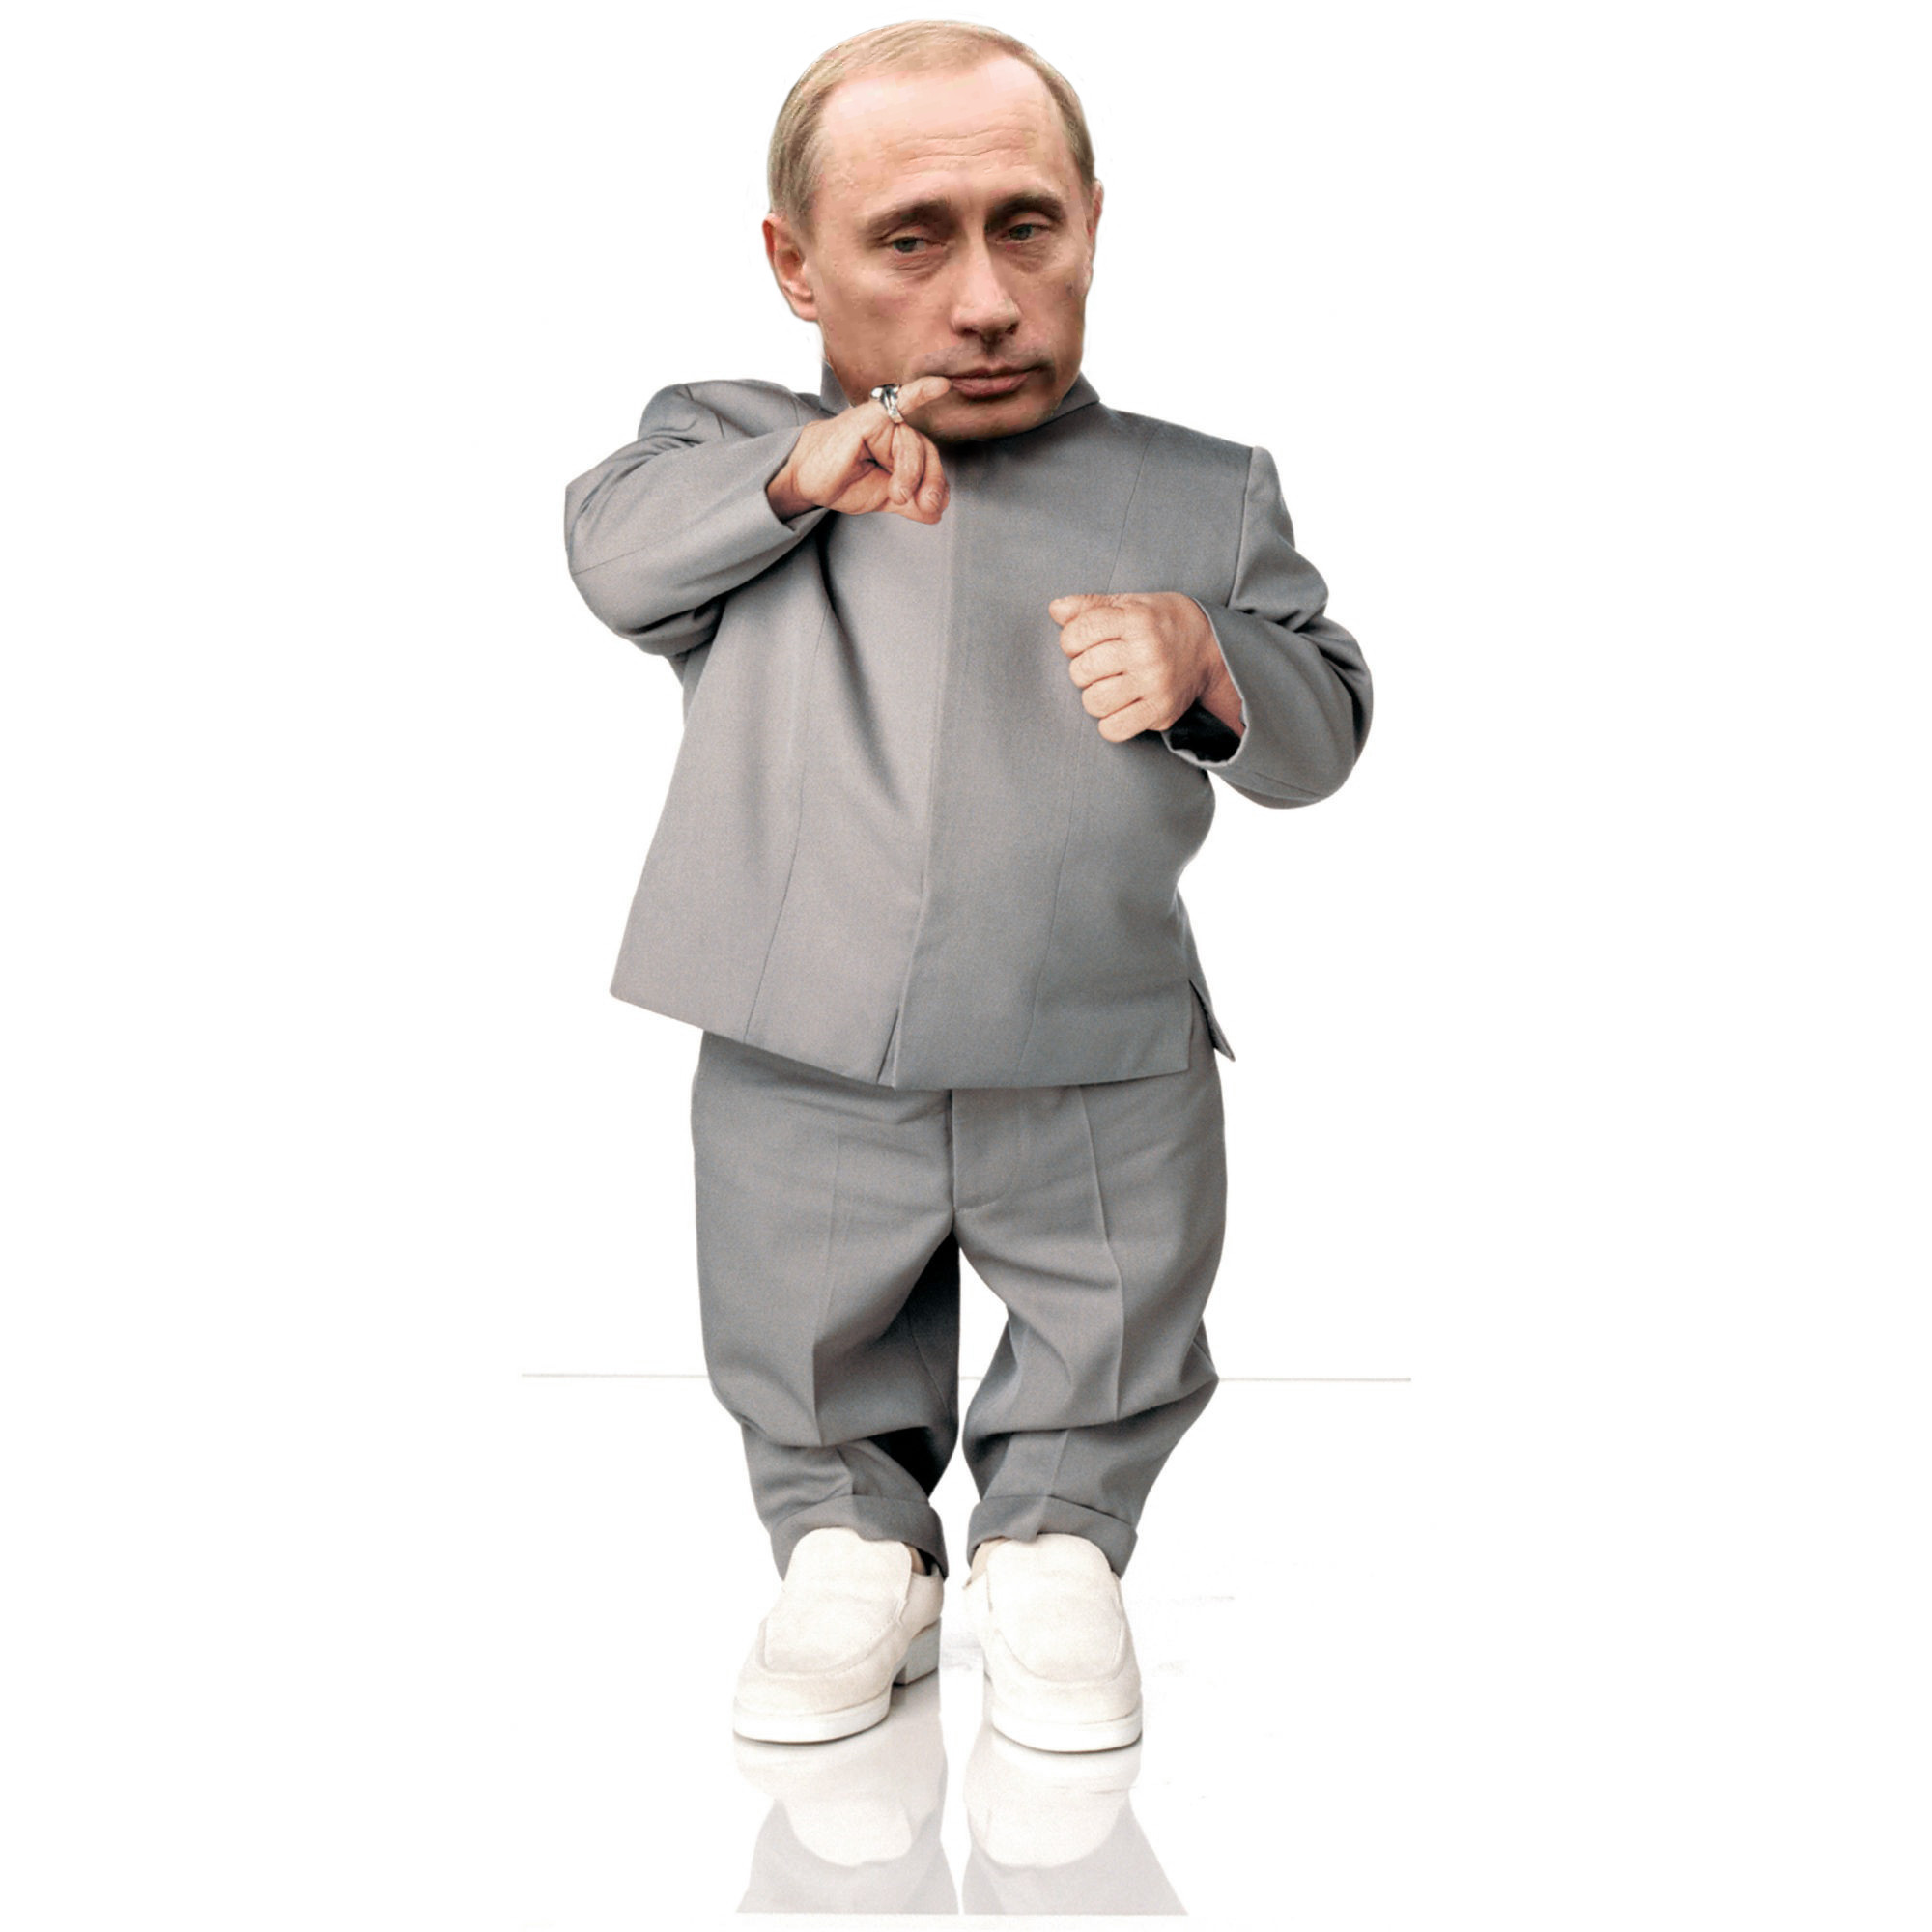 Vladimir Putin Endorses His Mini-Me, Donald Trump.